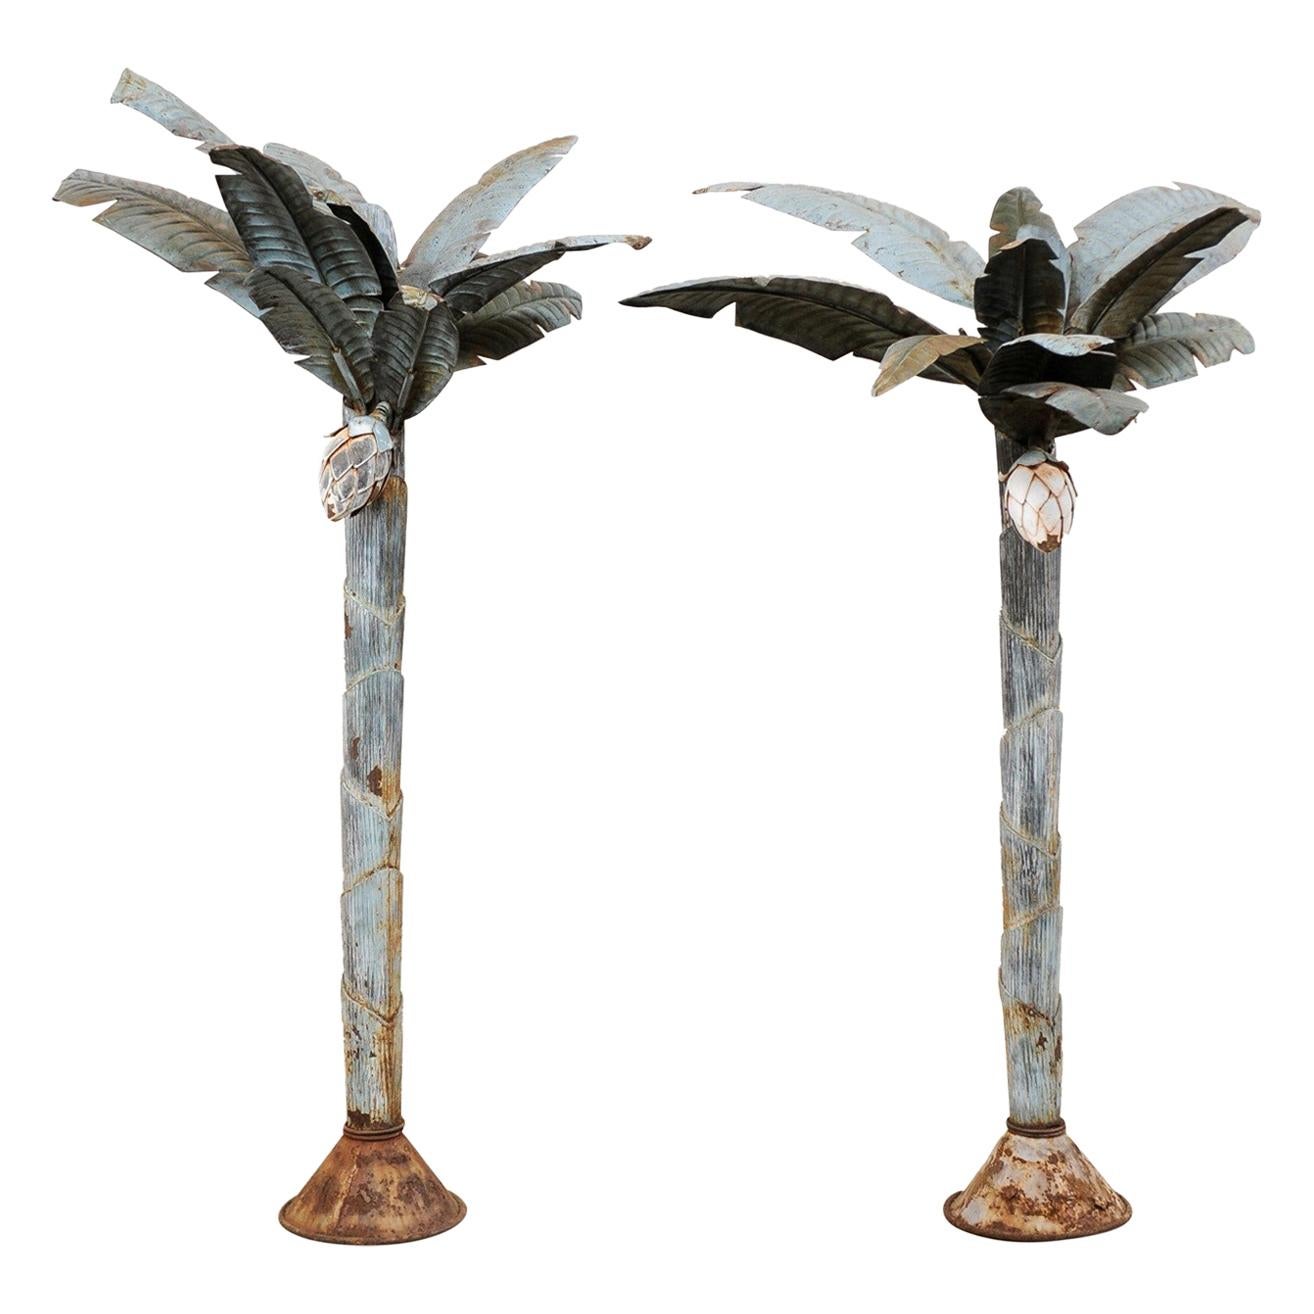 Pair of Midcentury Tropical Painted Metal Palm Tree Sculptures